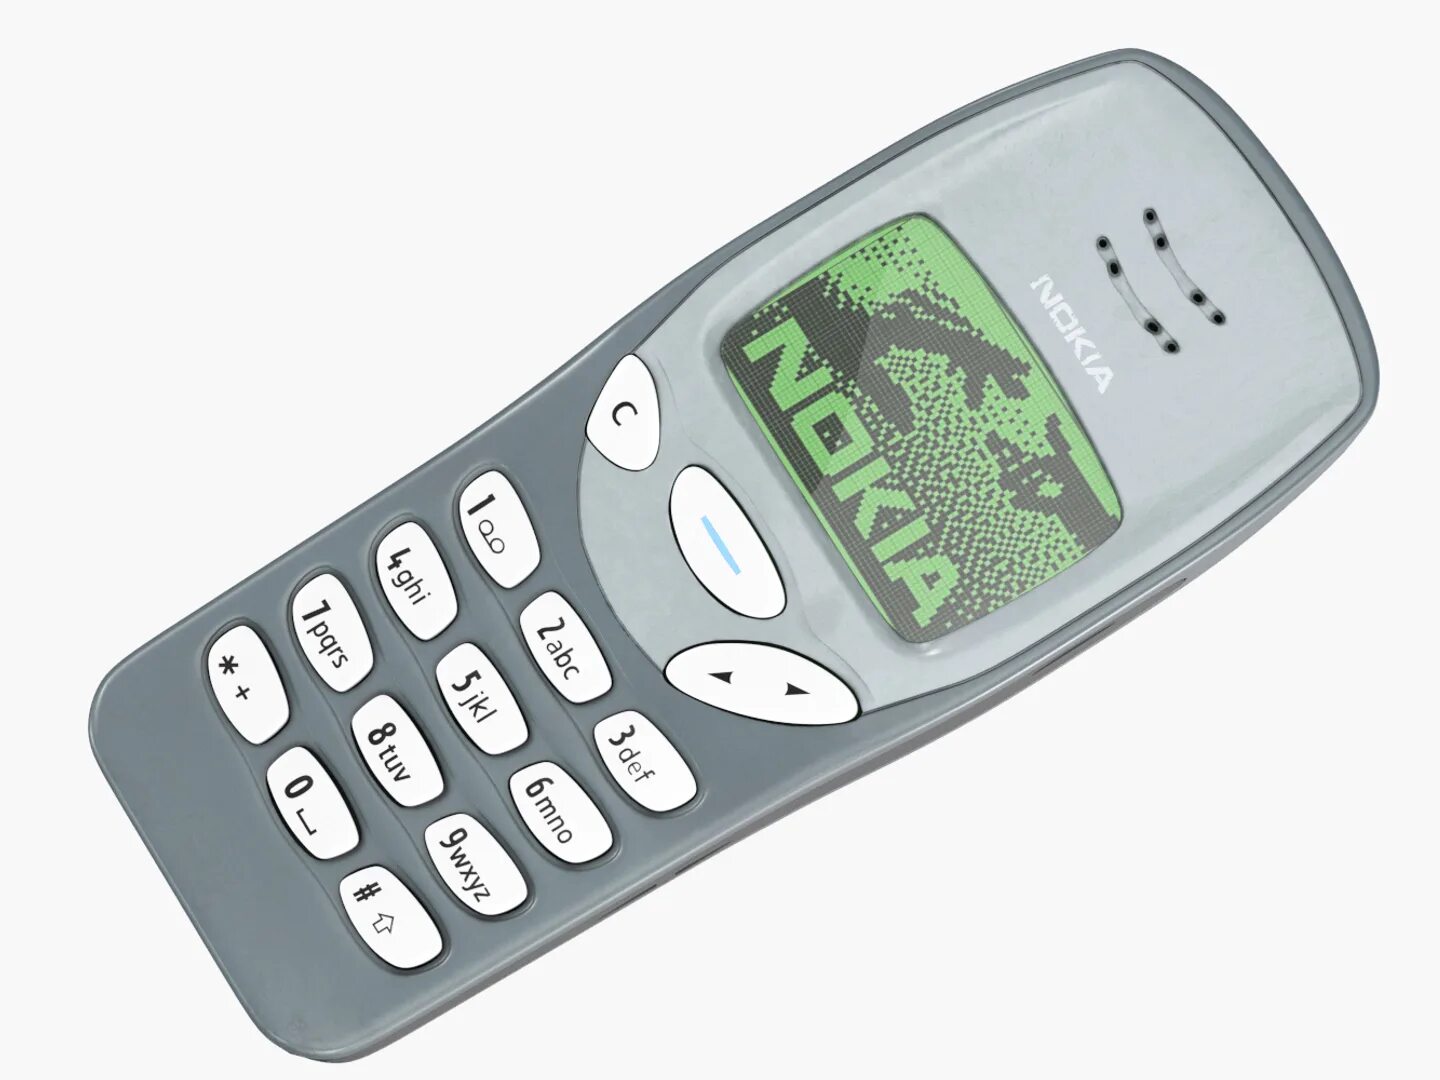 Телефон 32 10. Nokia 3210 1999. Nokia 3210/3310. Нокиа 3210 и 3310. Модель Nokia 3210.